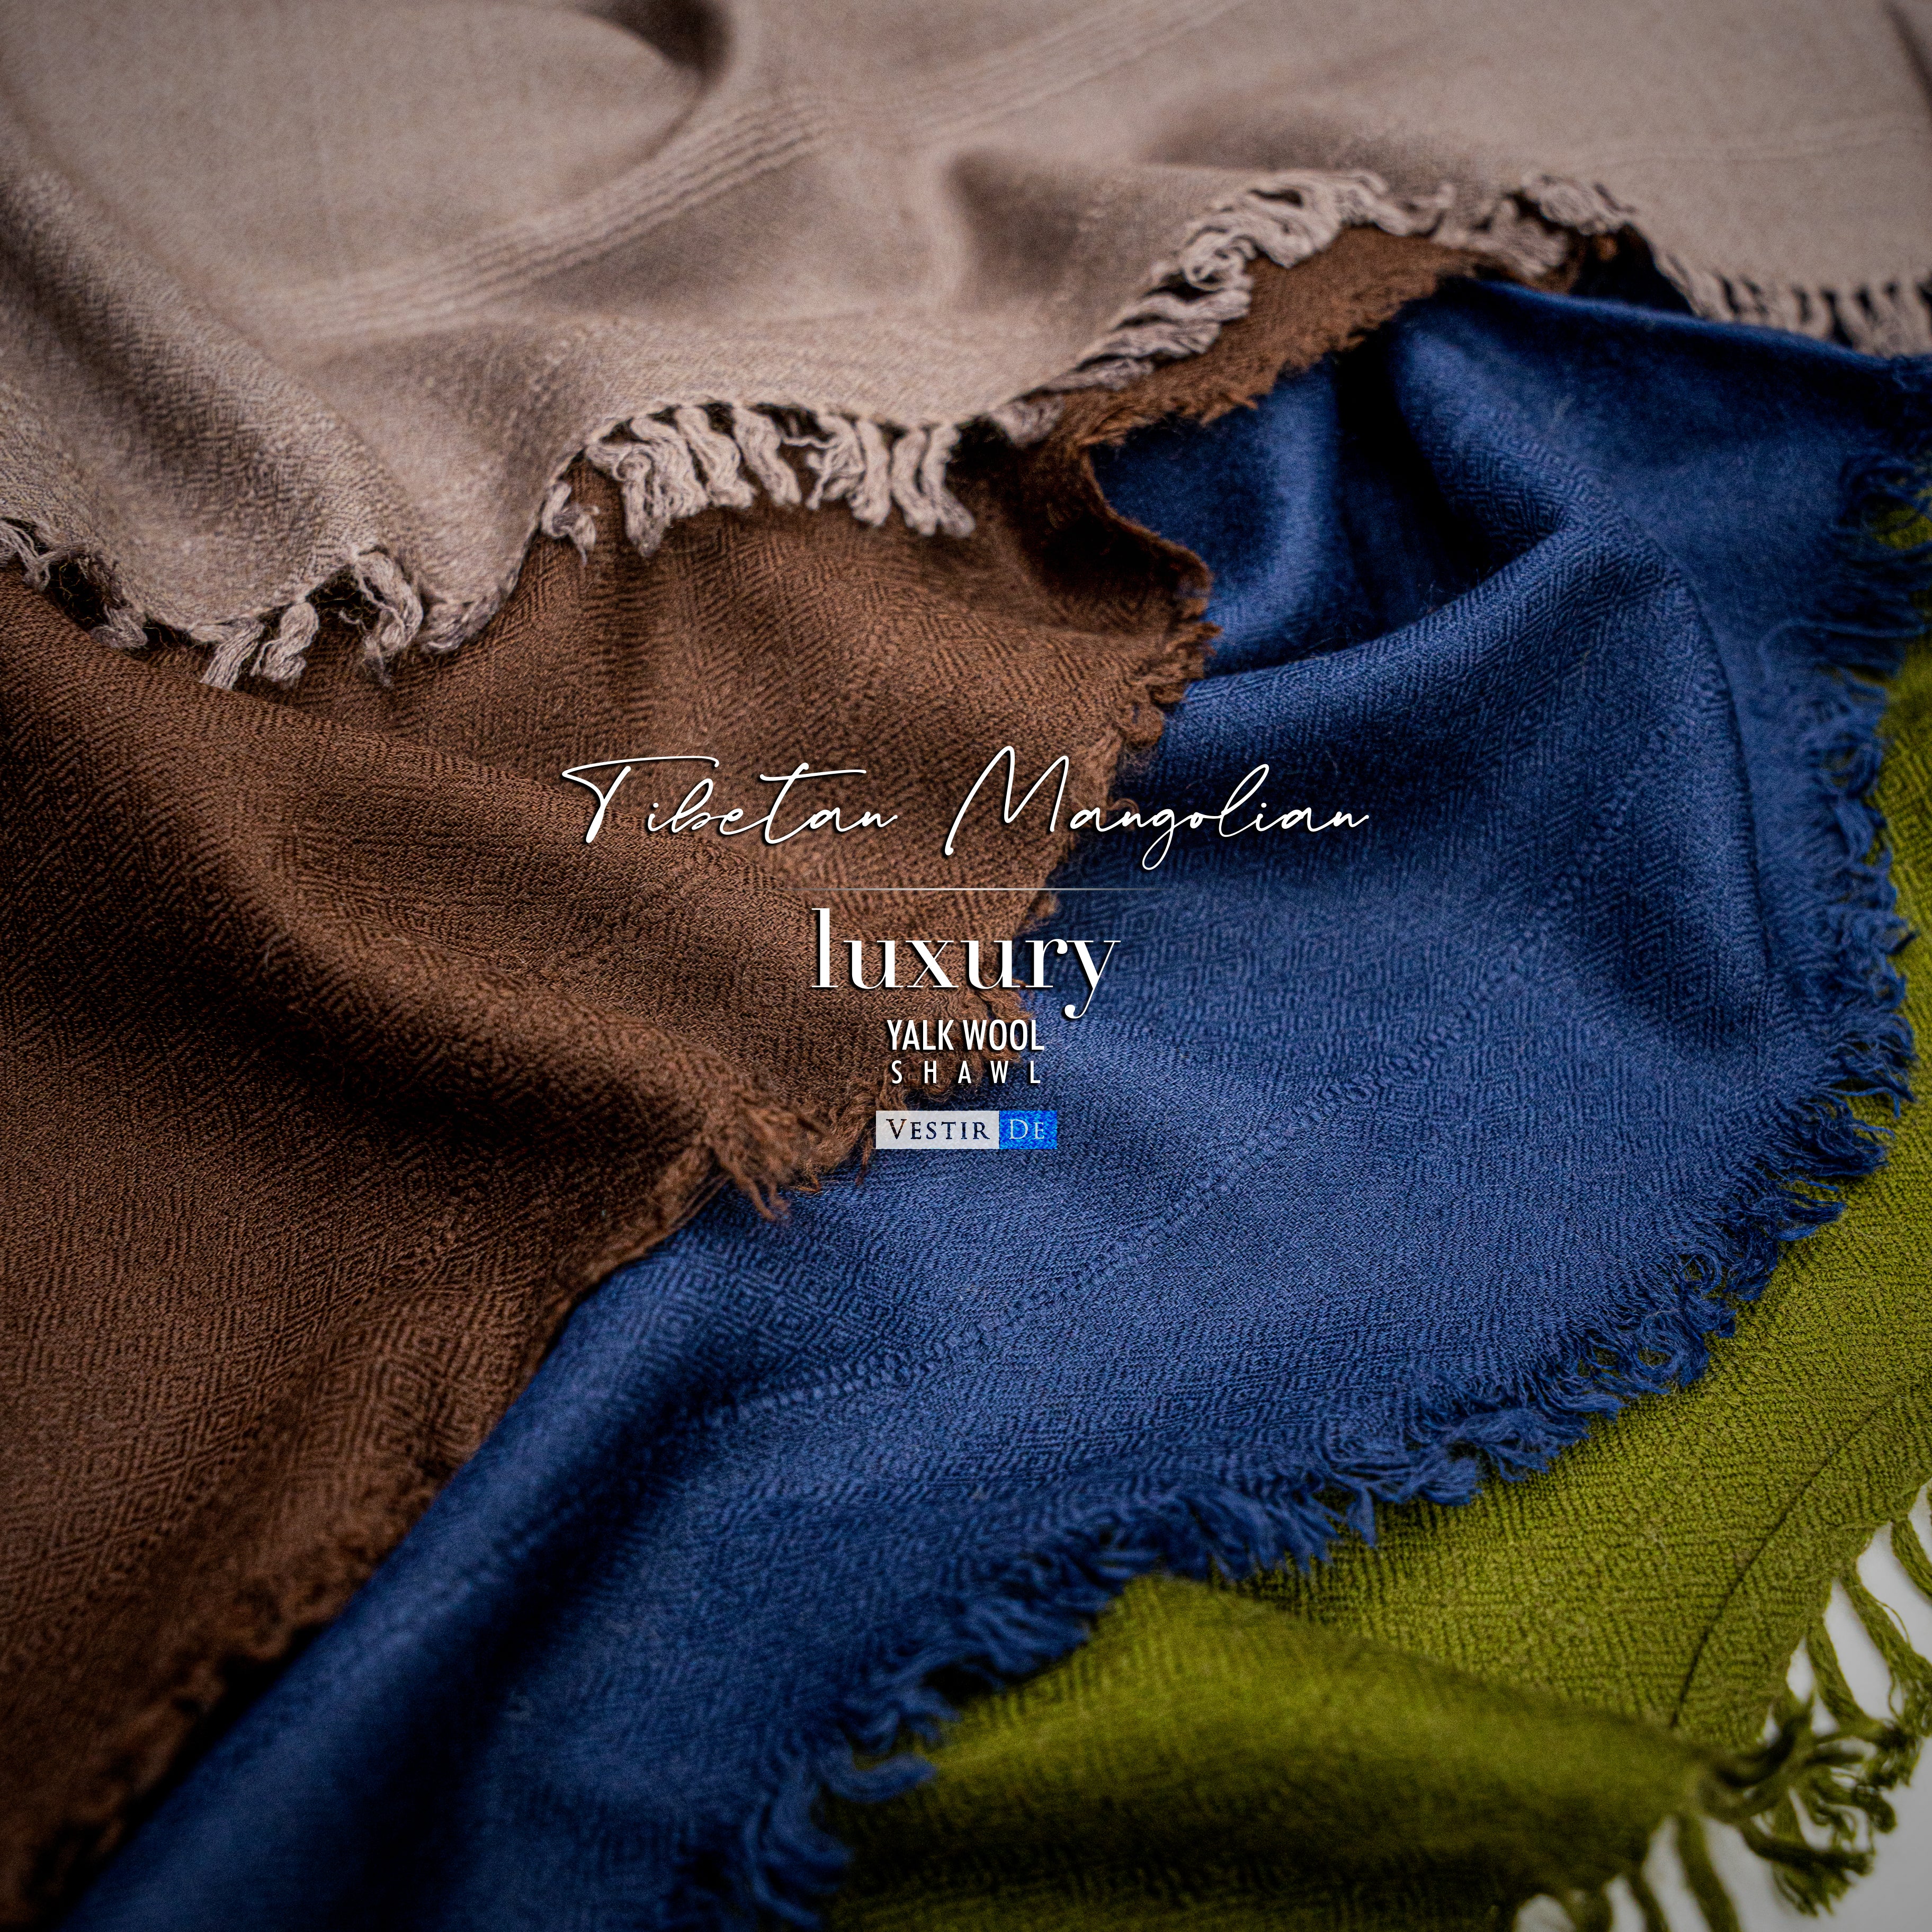 Tibetan Mangolian Luxury Yalk Wool Shawl 2021-22